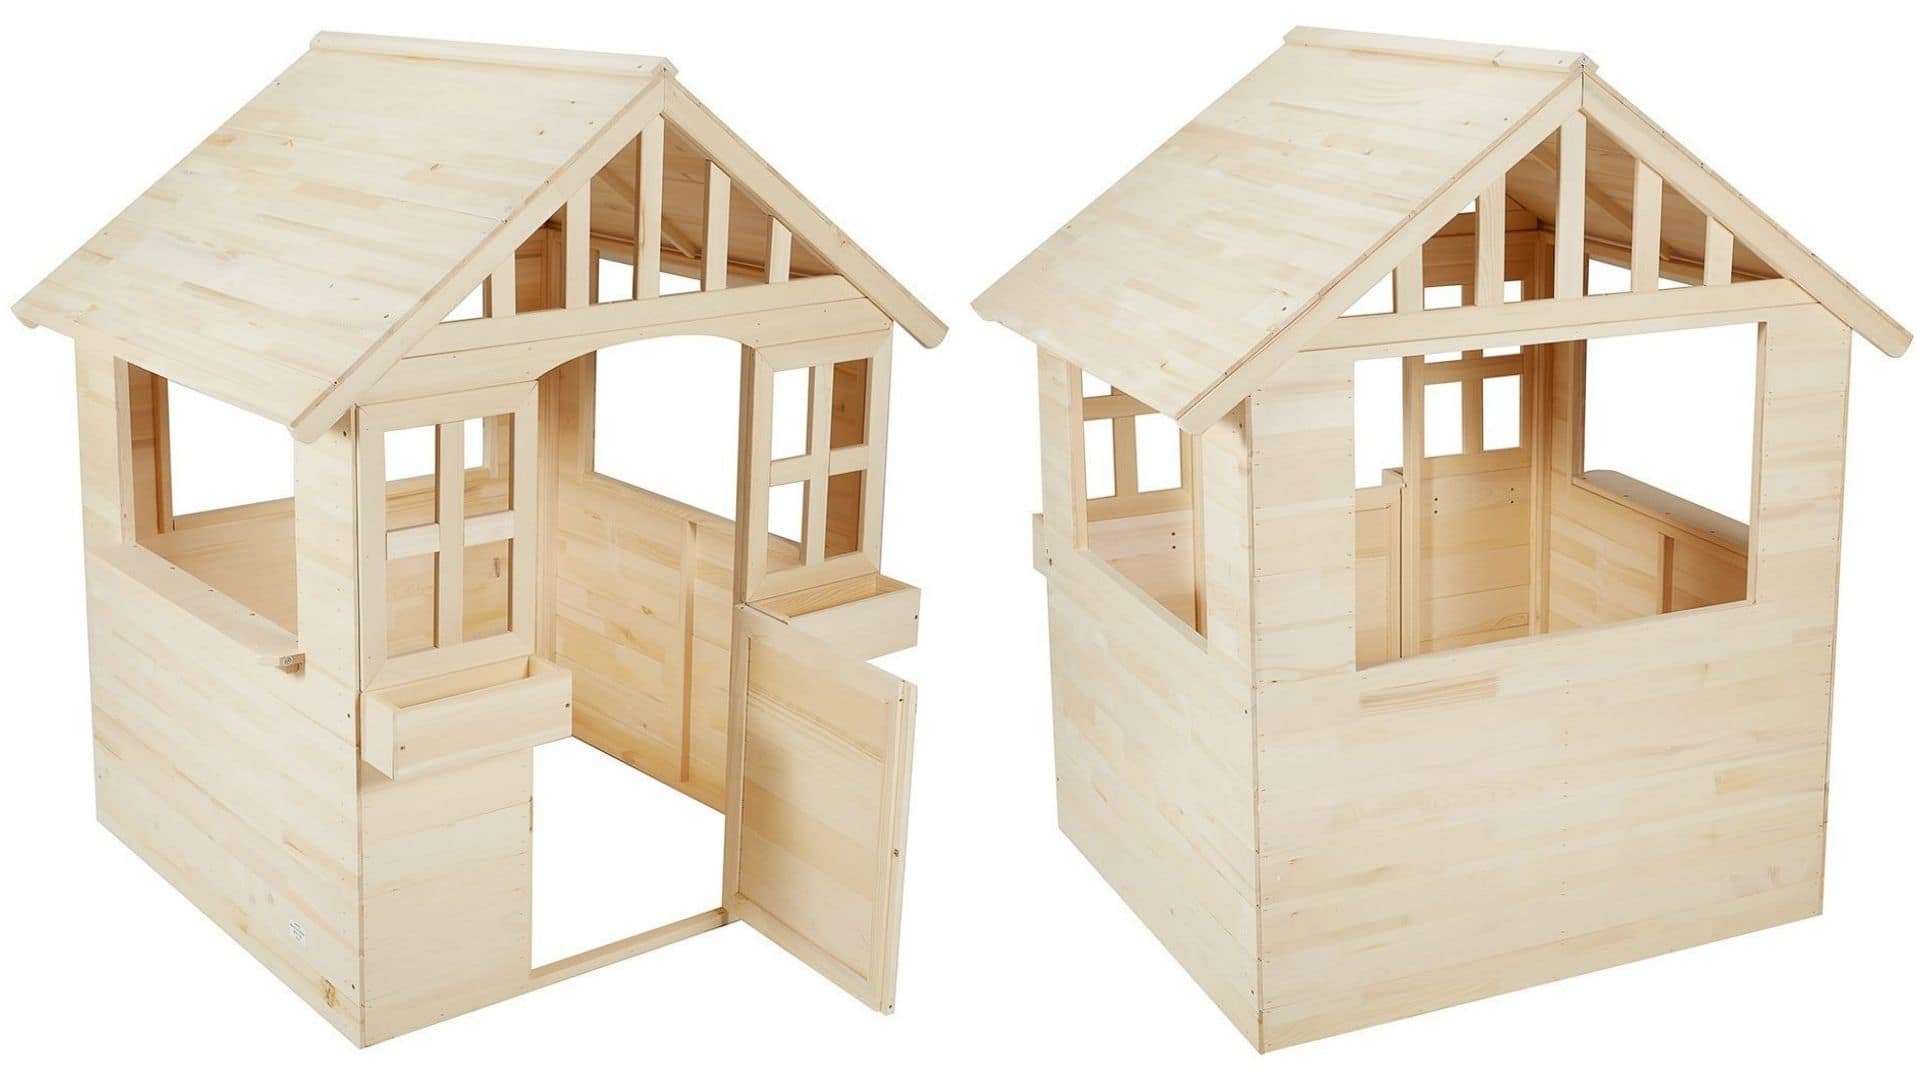 A plain wood outdoor playhouse.